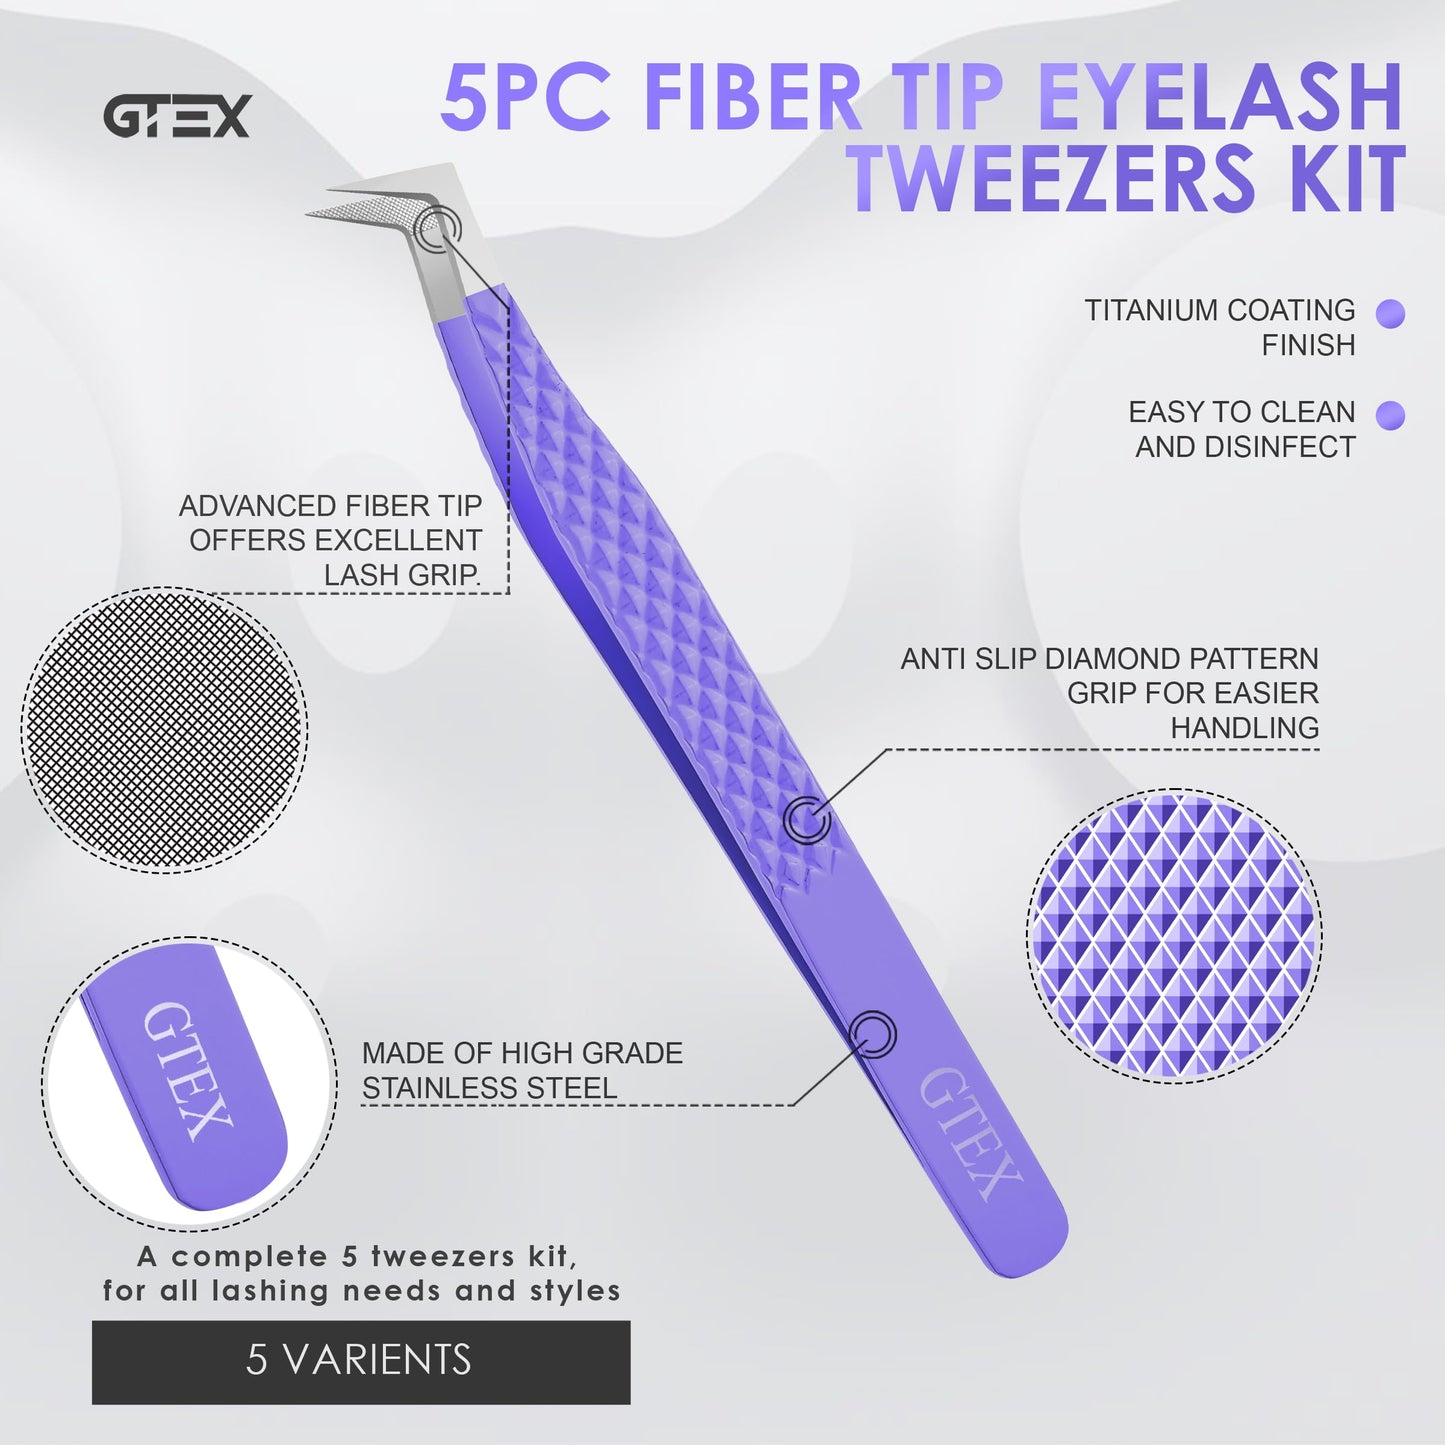 GTEX Fiber Tip Lash Tweezers For Eyelash Extension Tweezers Set of 5, Professional Eyelash Tweezers For Lash Extensions - 90 45 Degree Curved Volume Lash Tweezer Purple